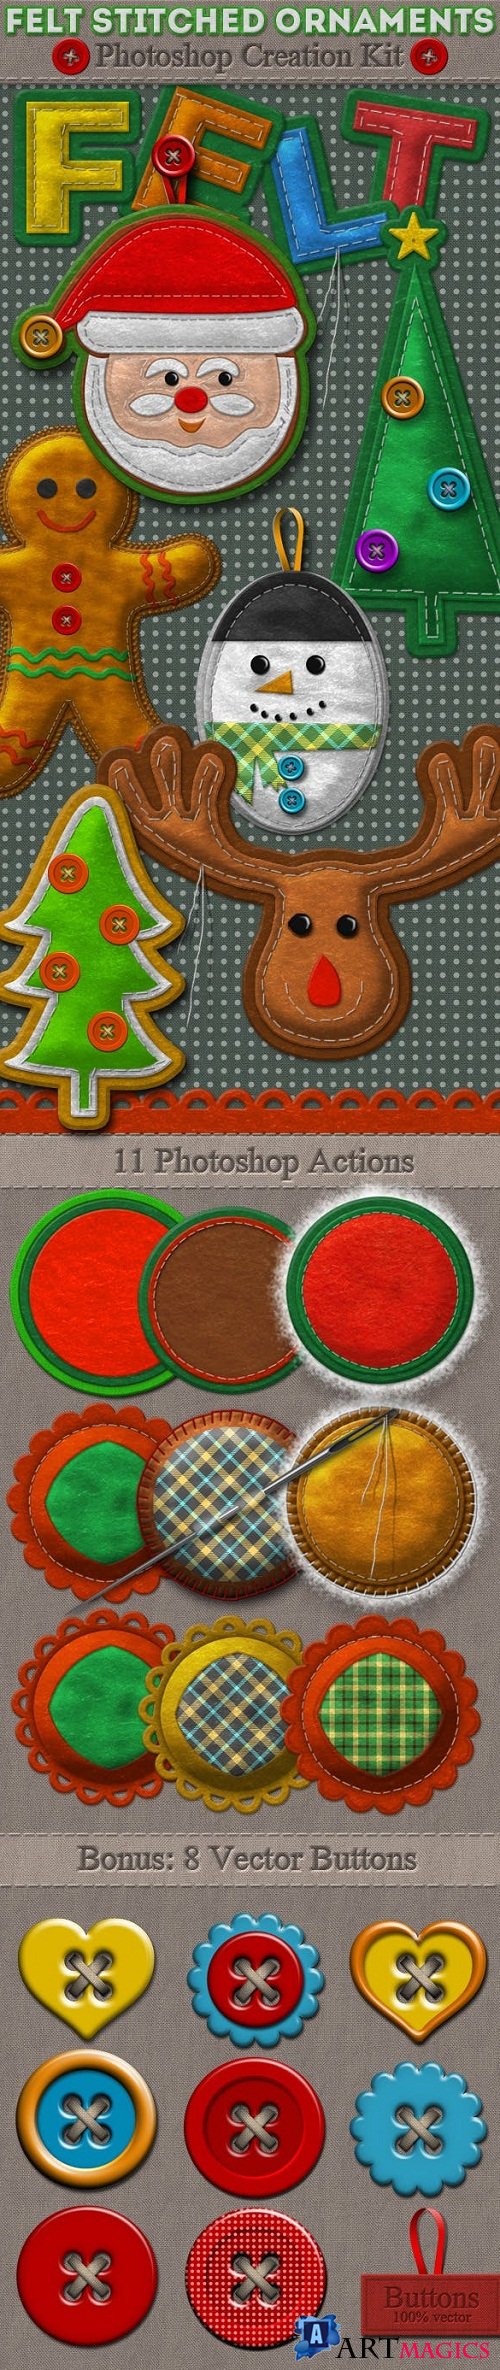 Felt Stitched Ornaments Photoshop Creation Kit - 9693079